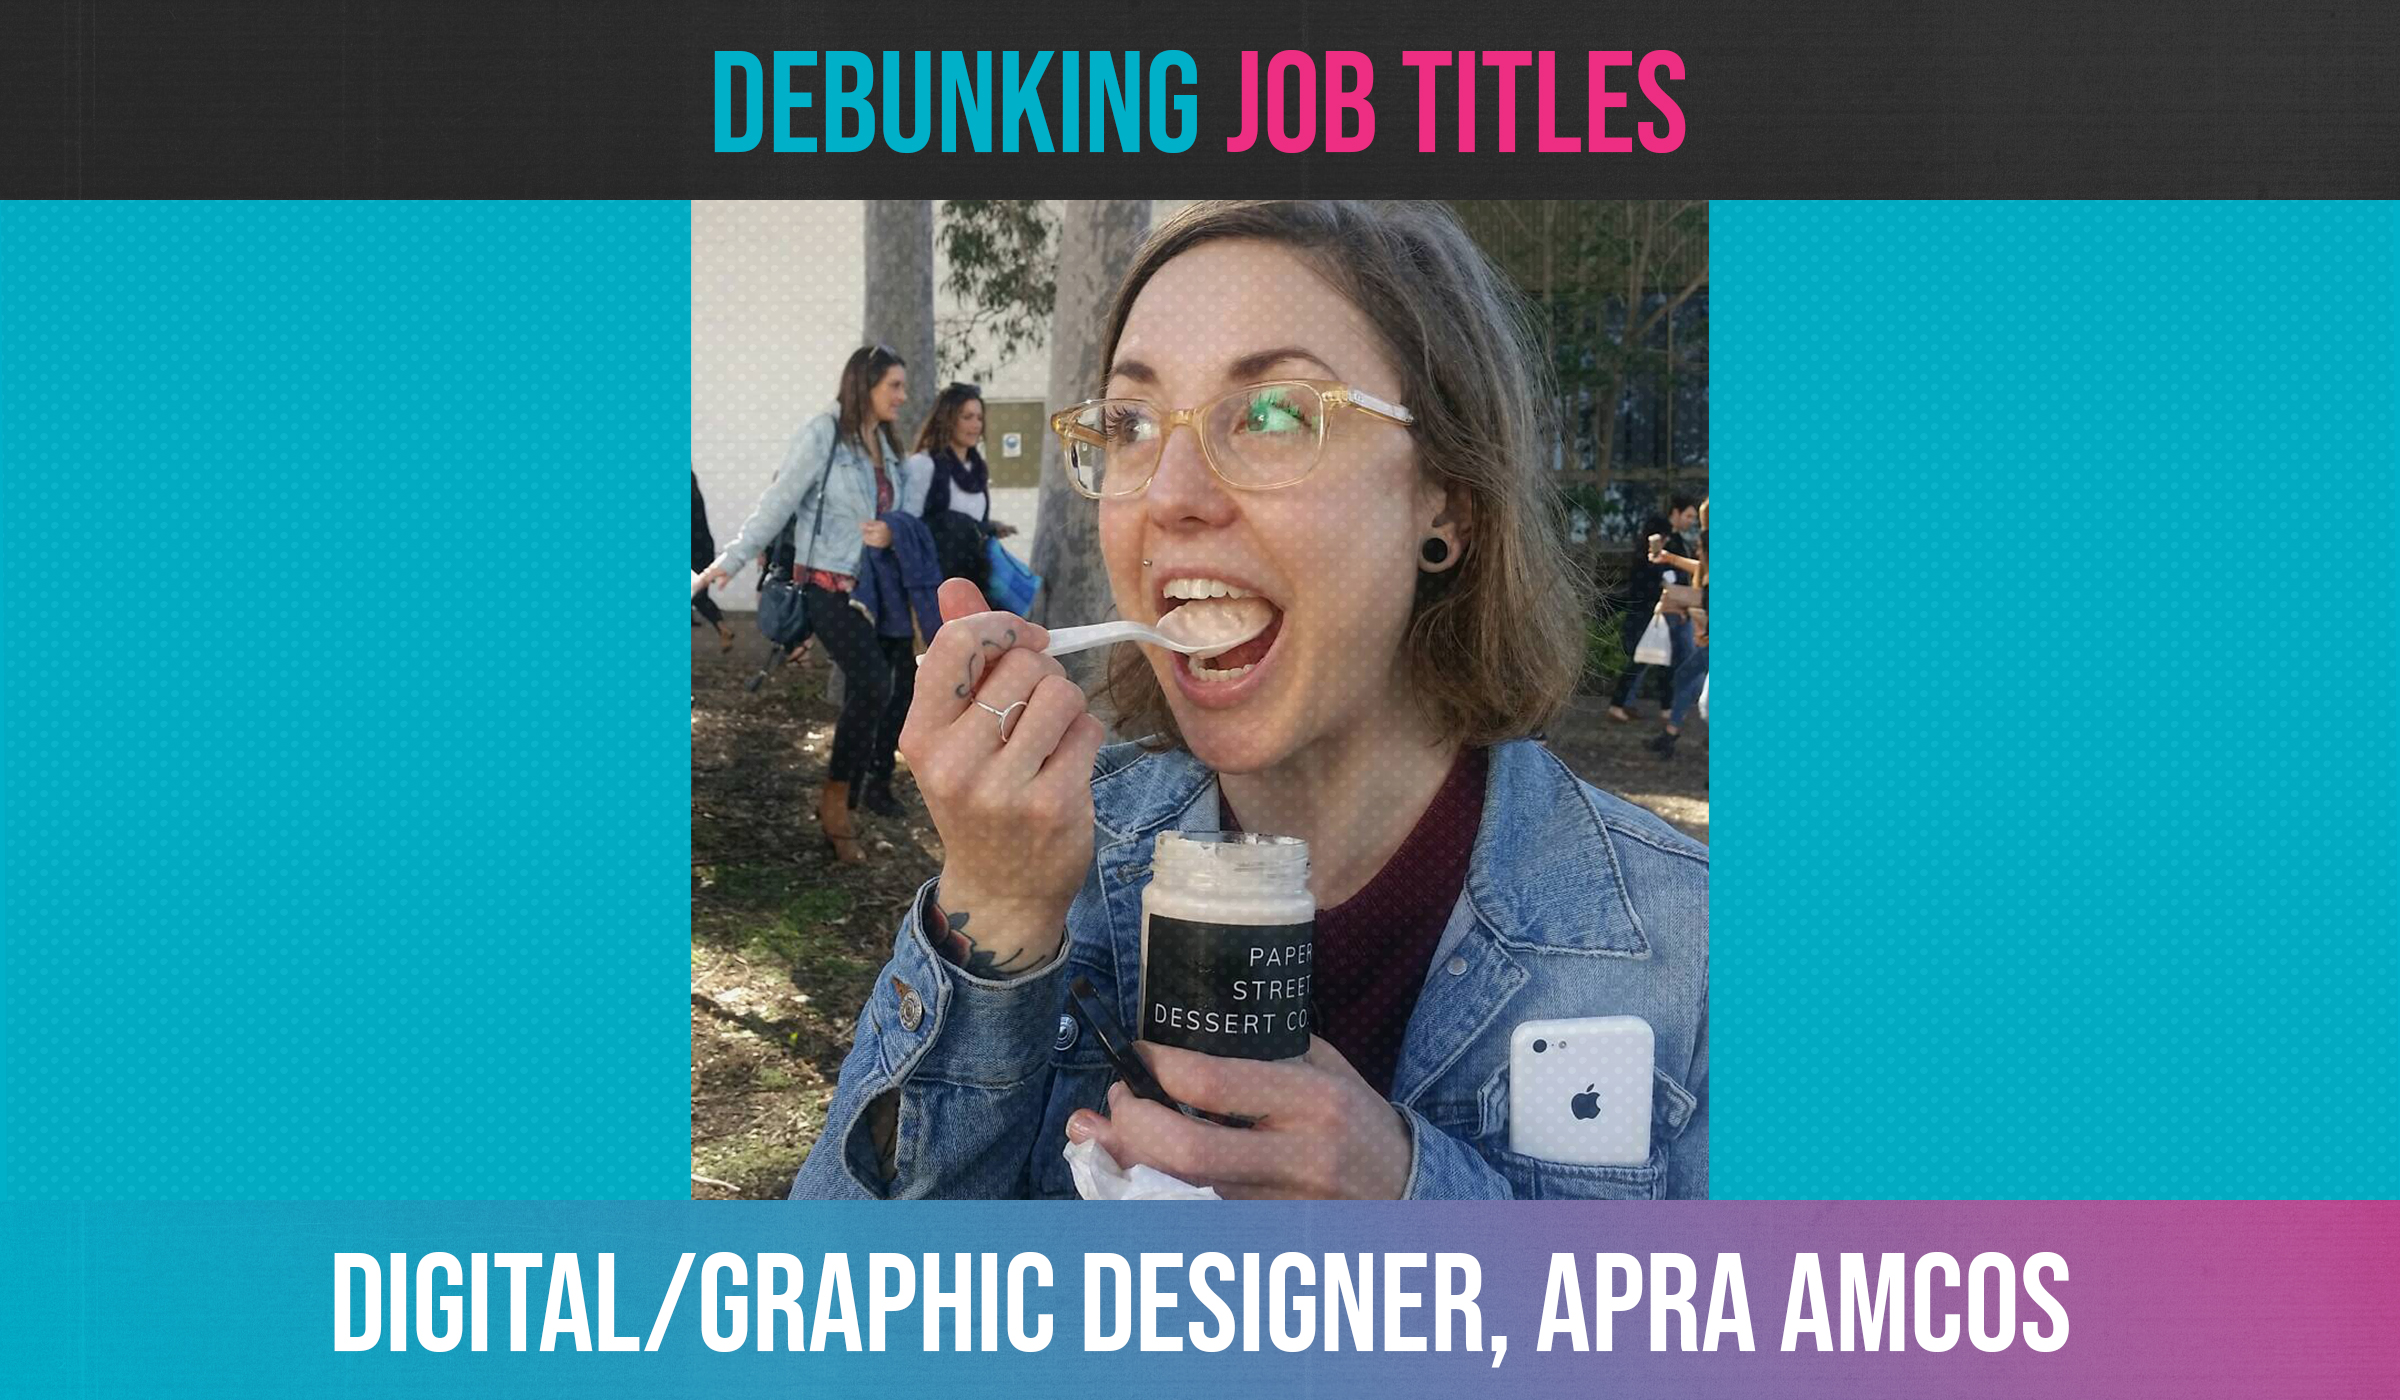 Debunking Job Titles: Digital/Graphic designer at APRA AMCOS